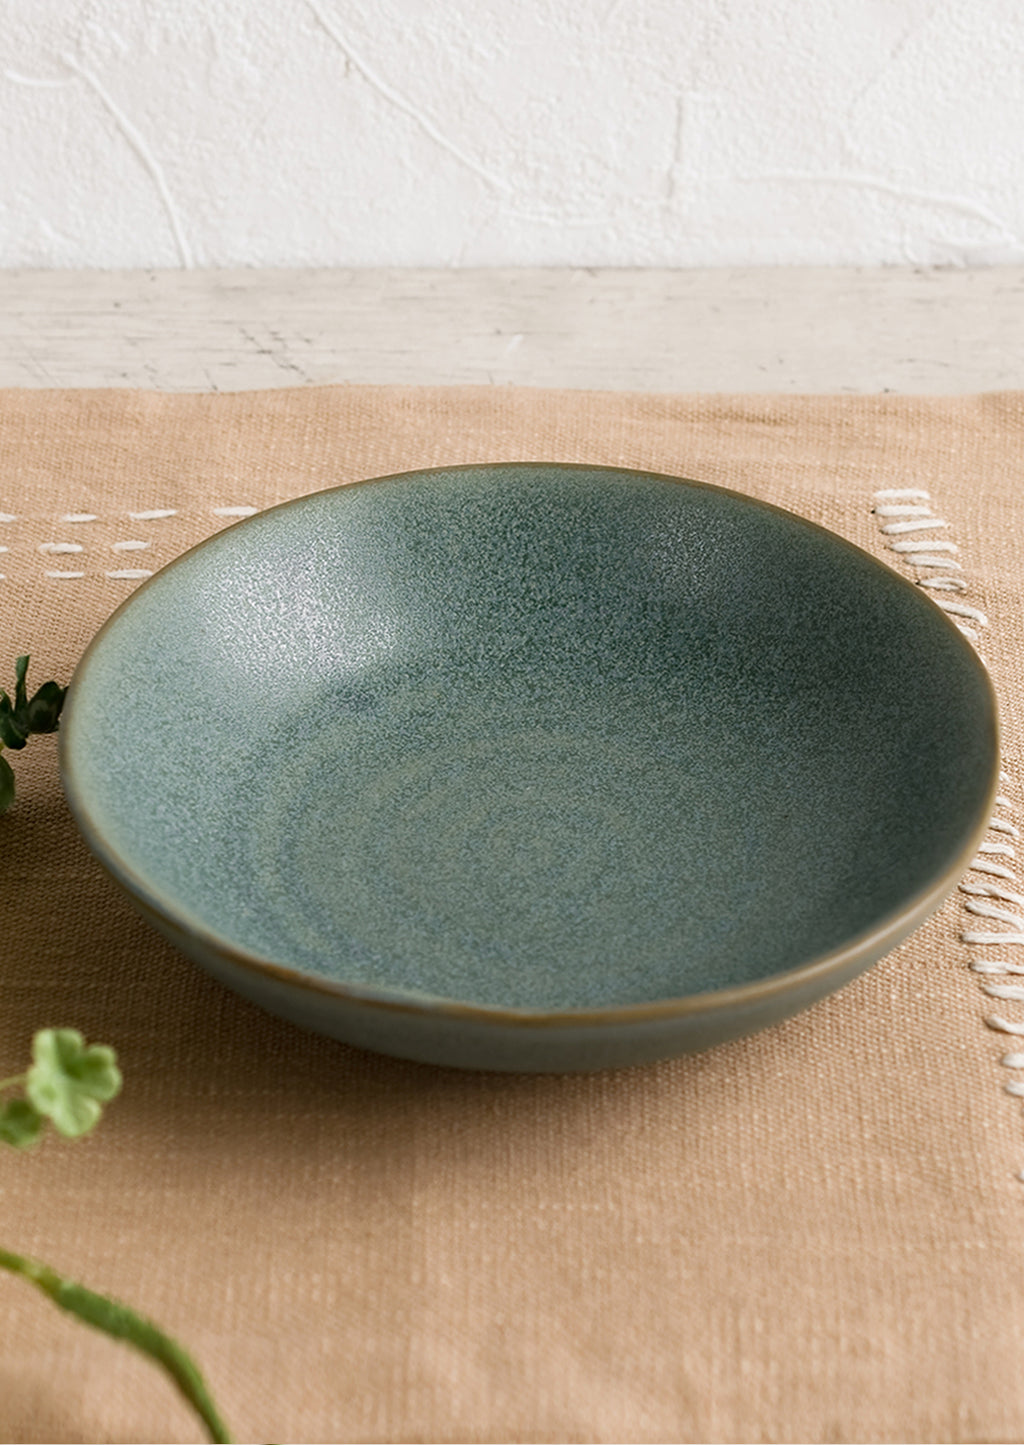 1: A mossy green-blue shallow ceramic bowl.